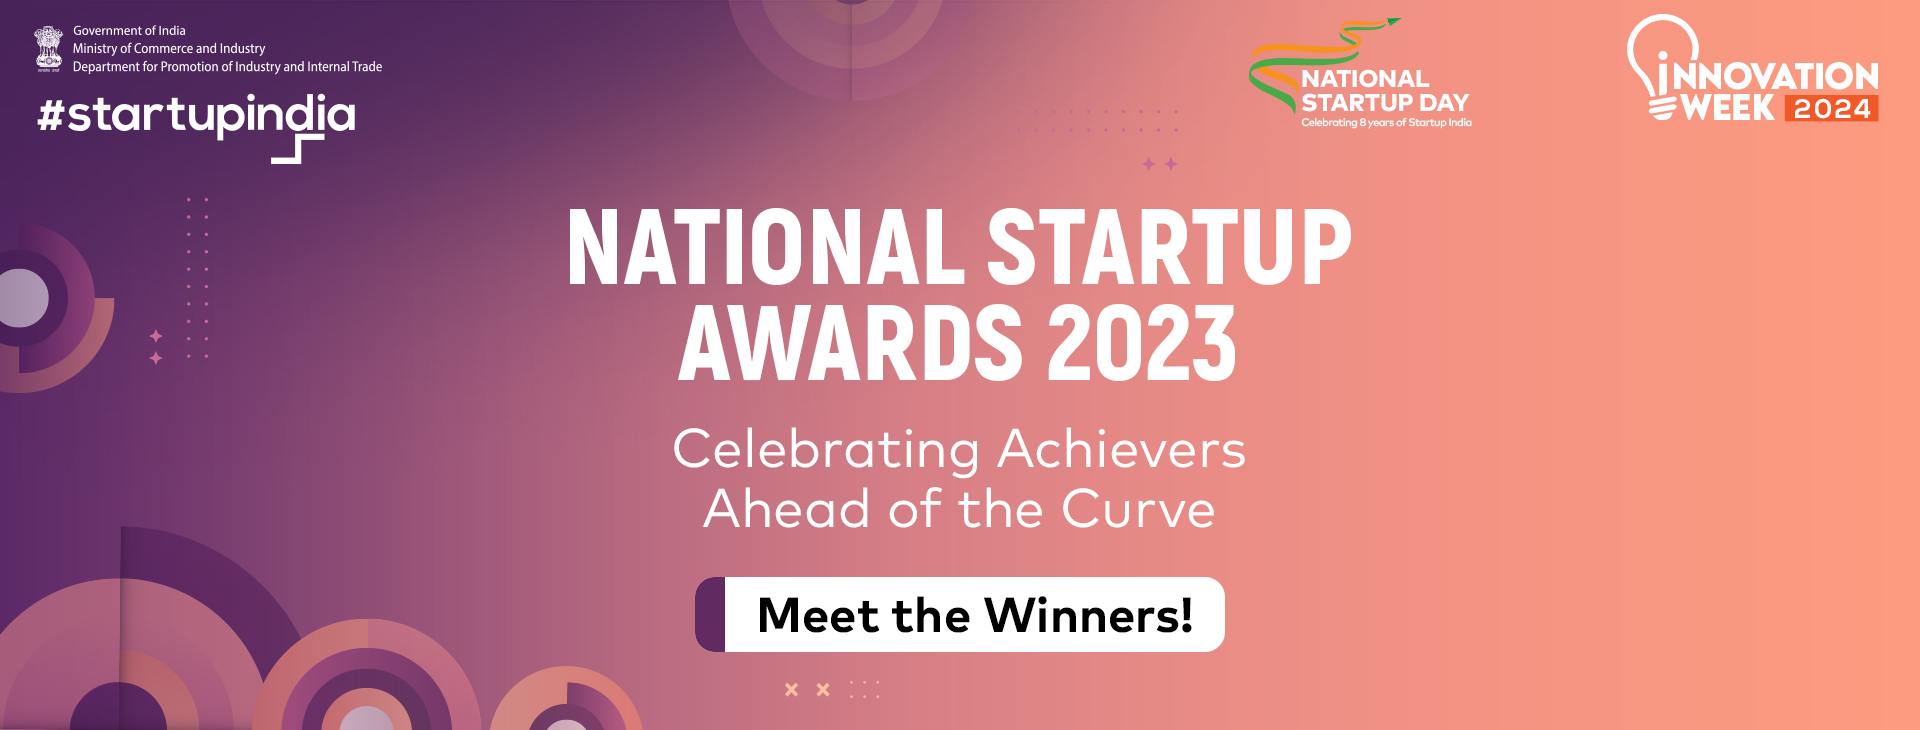 National Startup Awards 2023 Results